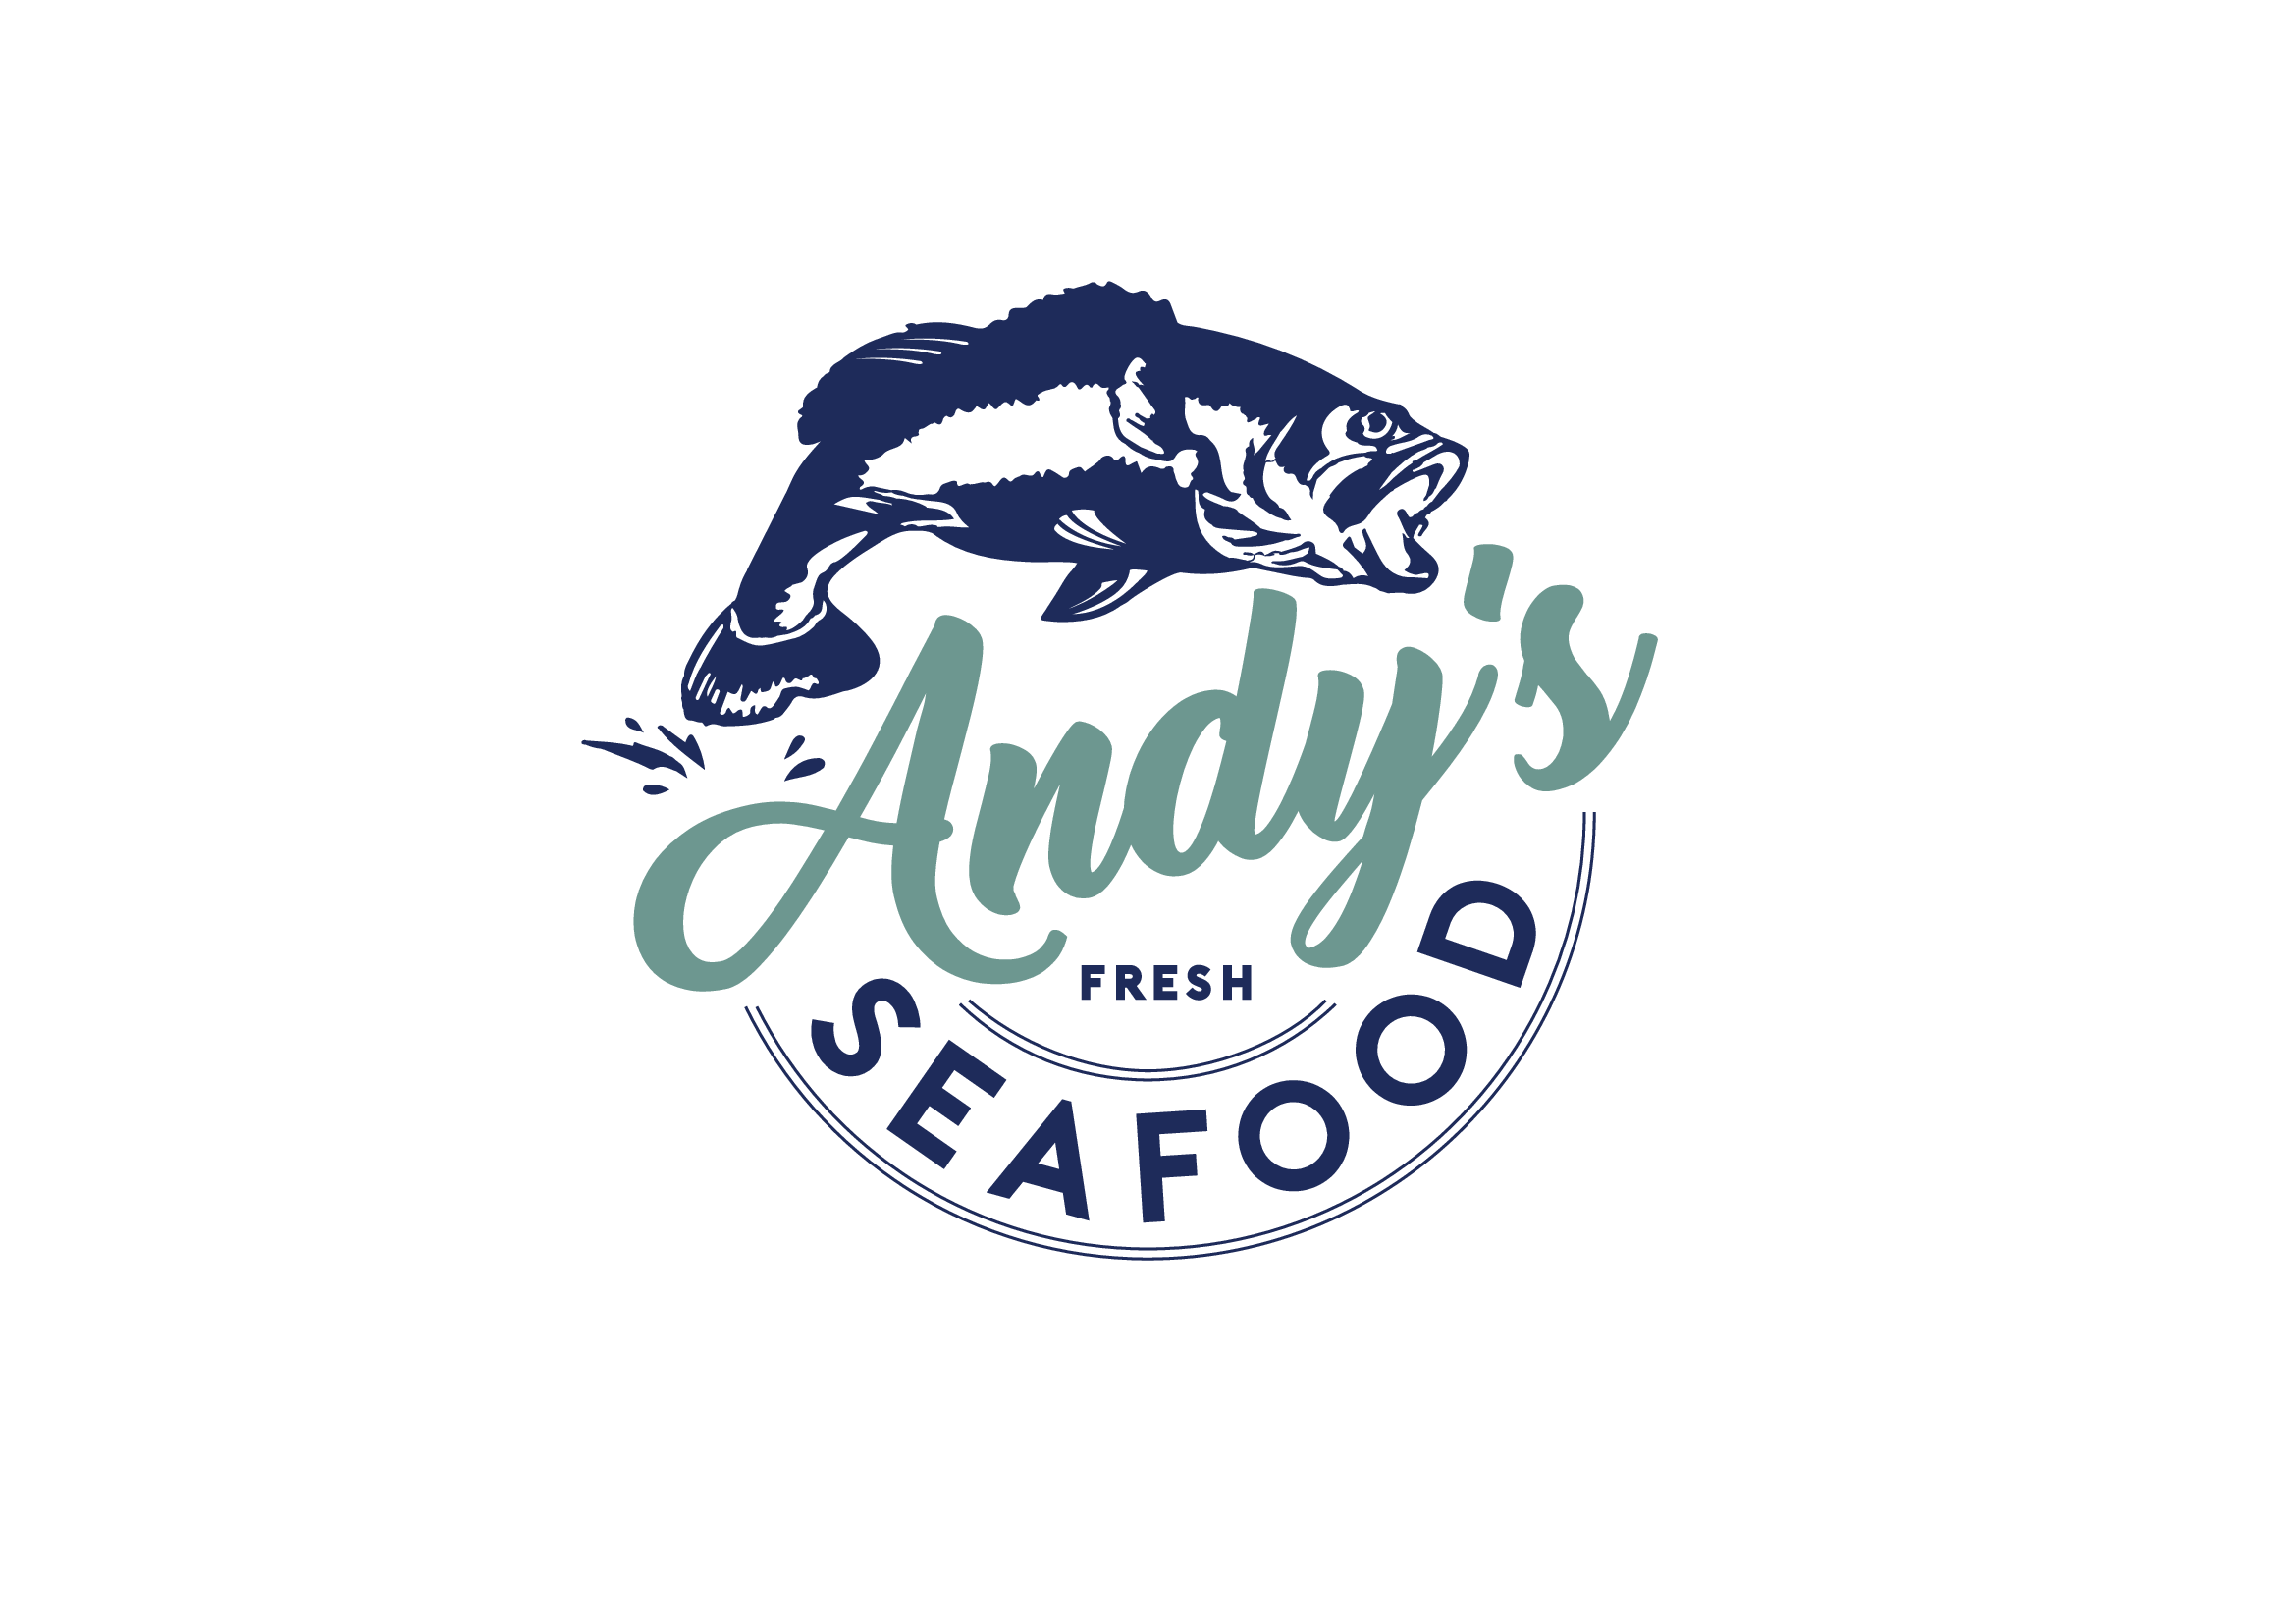 AndysSeafood_Logo_DARK.png